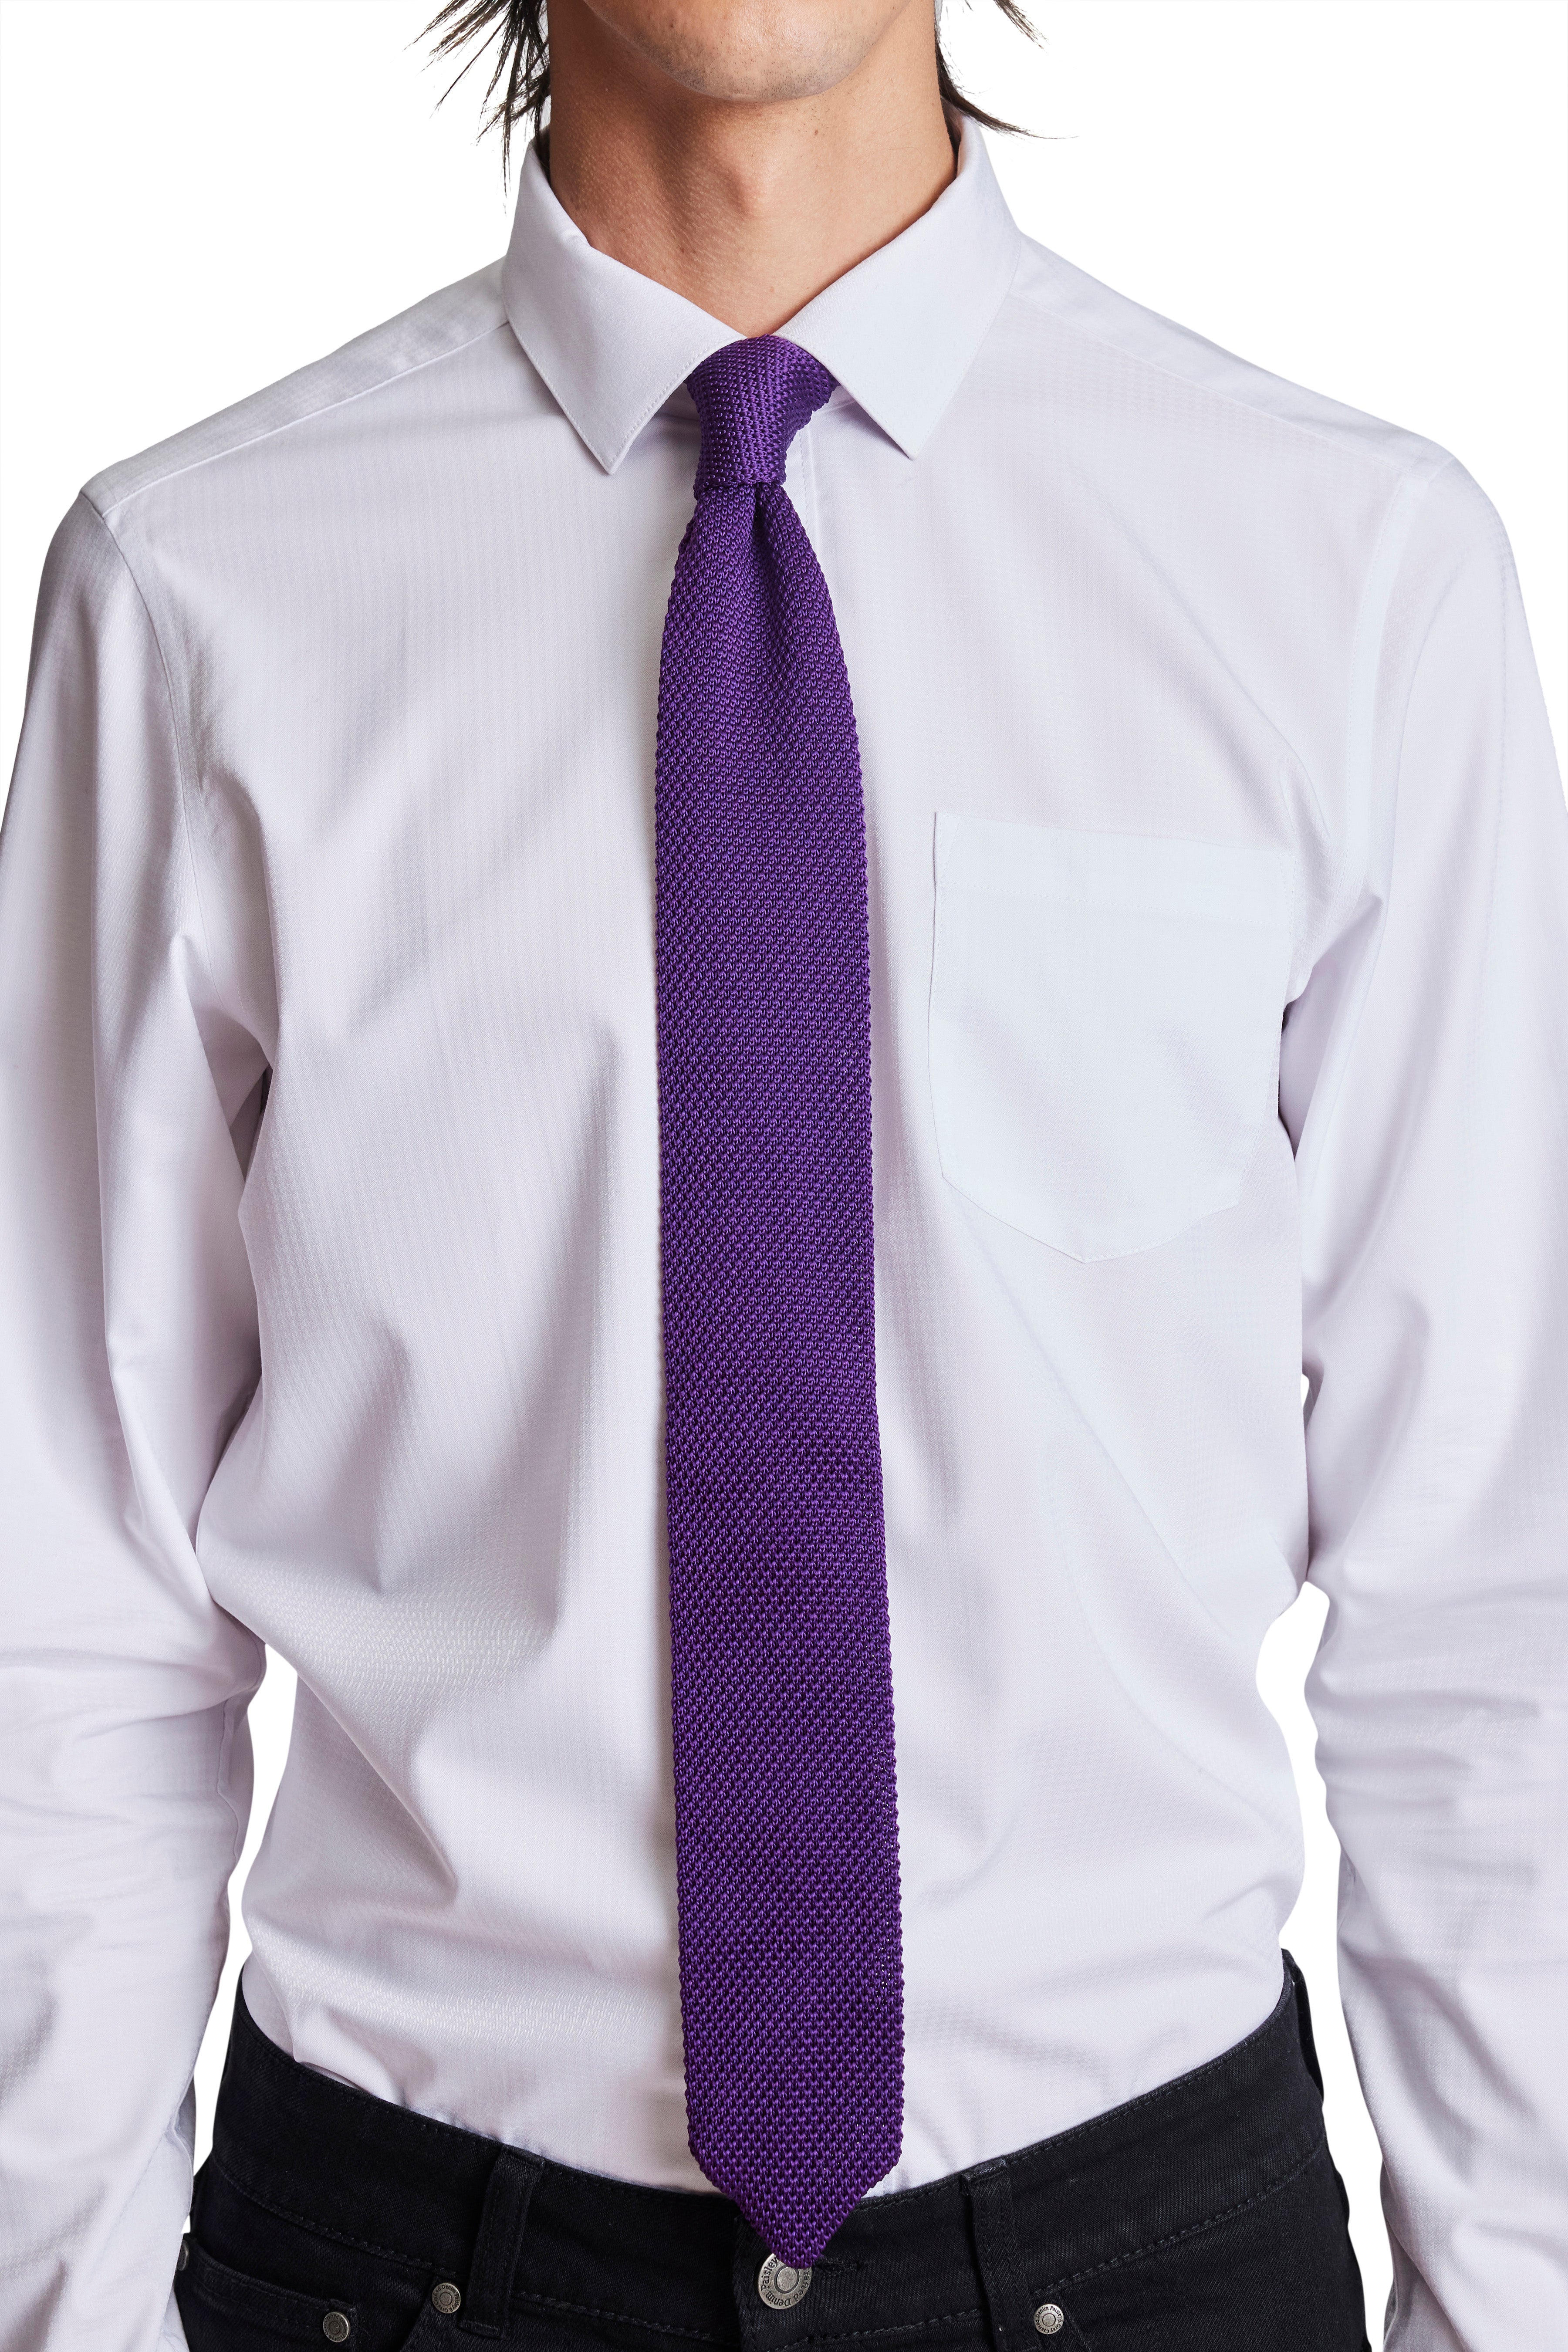 Stanley Knit Tie - Purple Night